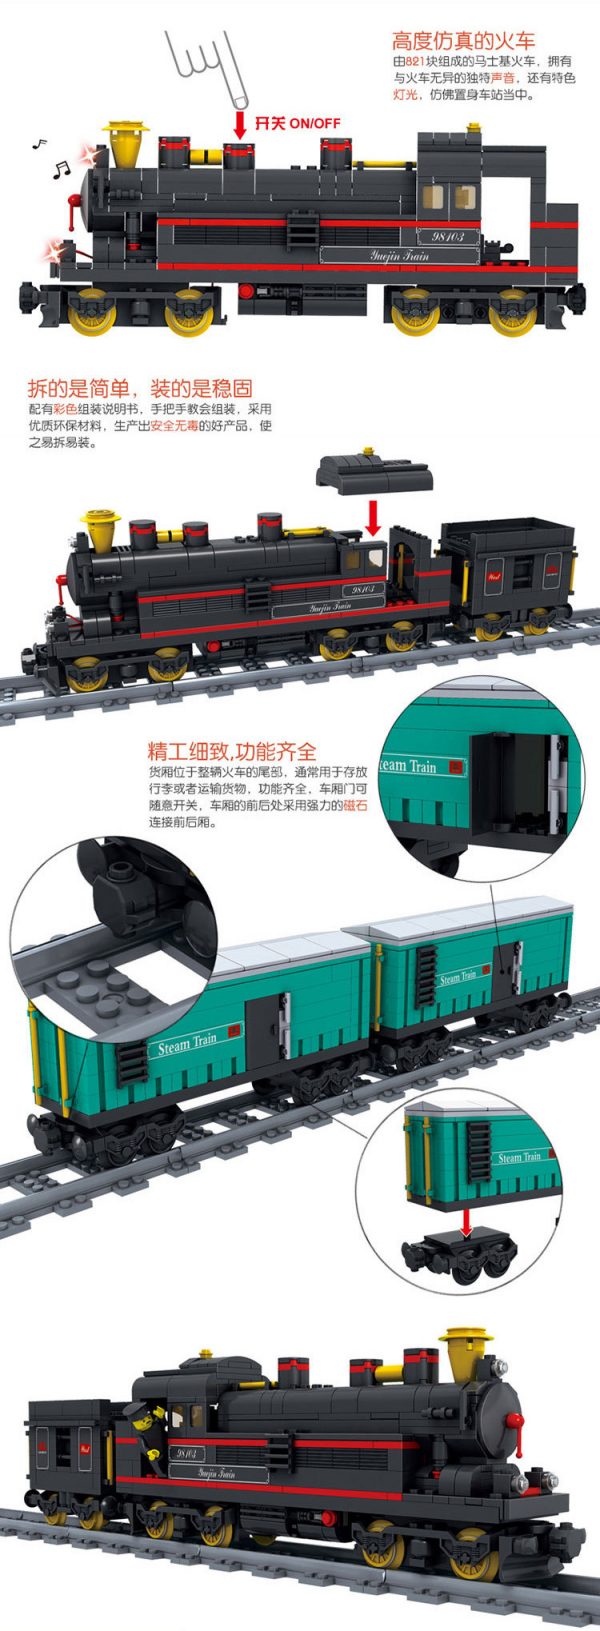 KAZI / GBL / BOZHI KY98226 Rail Train: Leap Forward 2